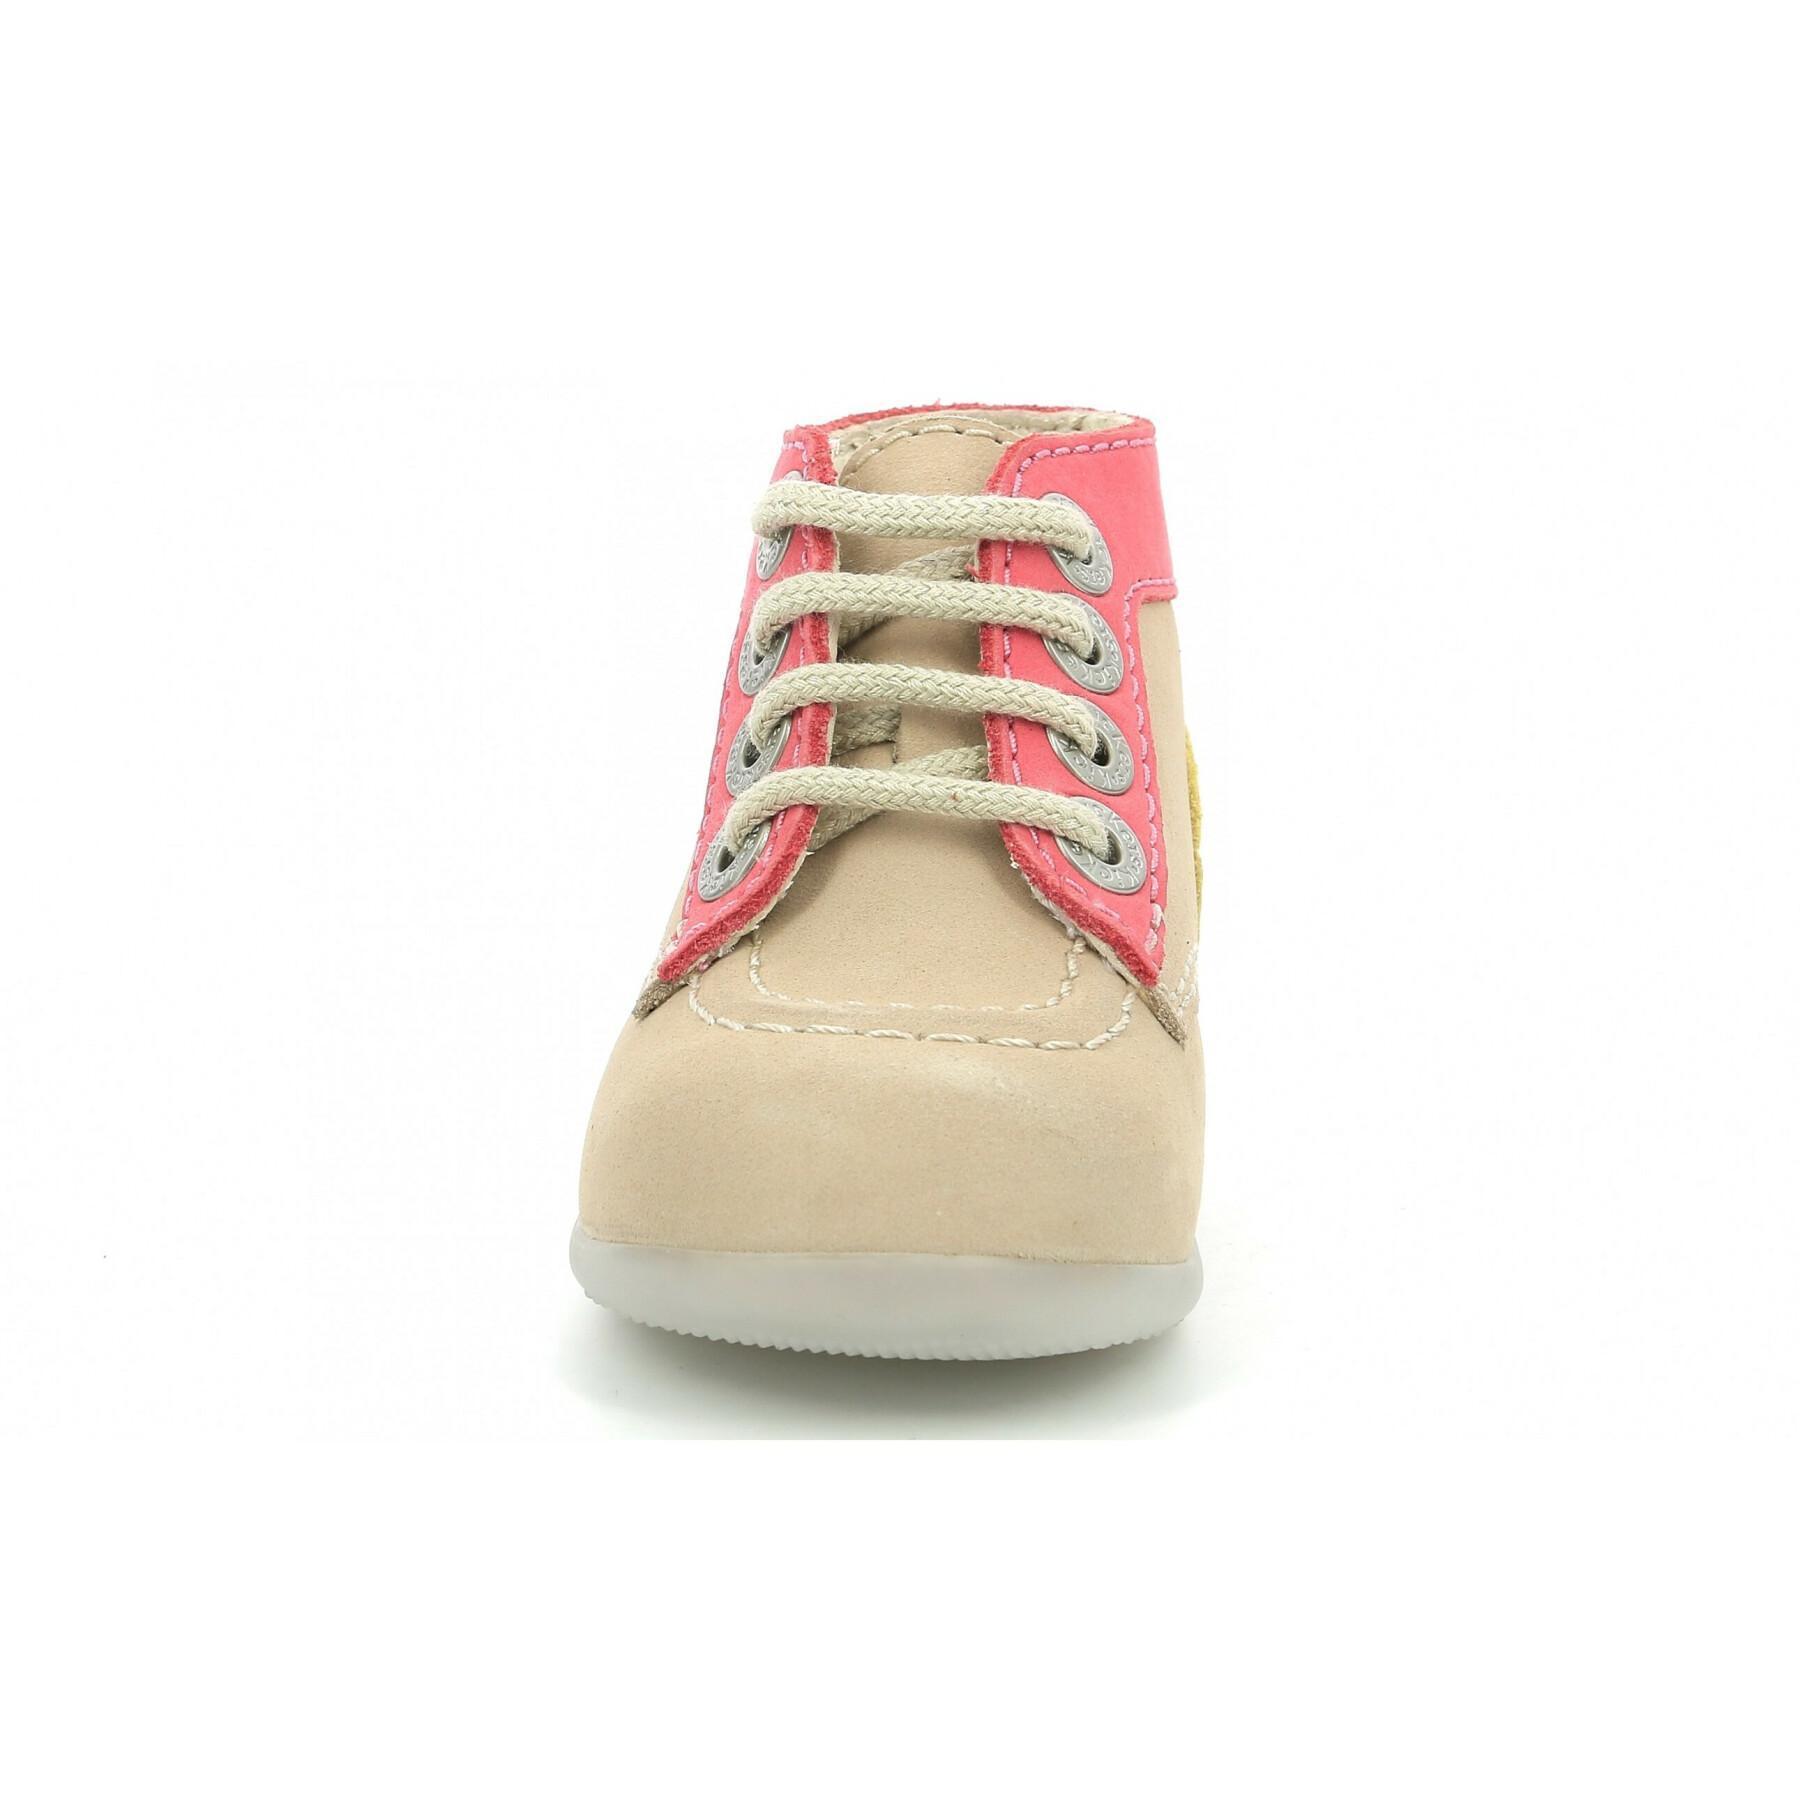 Baby shoes Kickers Bonbon-2